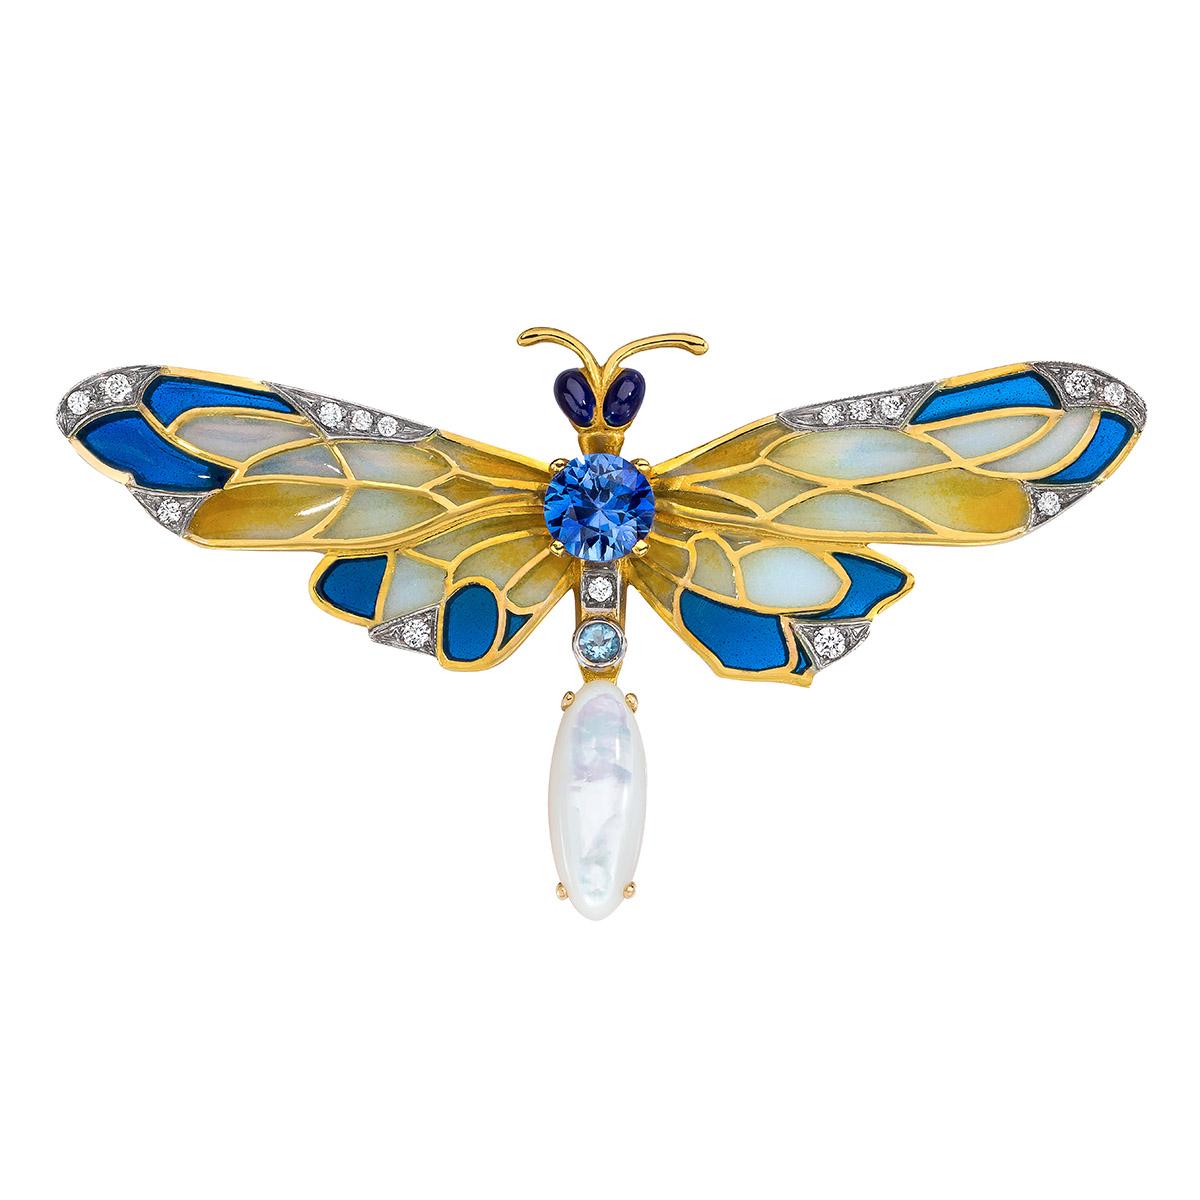 Masriera 18 Karat Gold Enamel, Diamond and Precious Stone Dragonfly Brooch